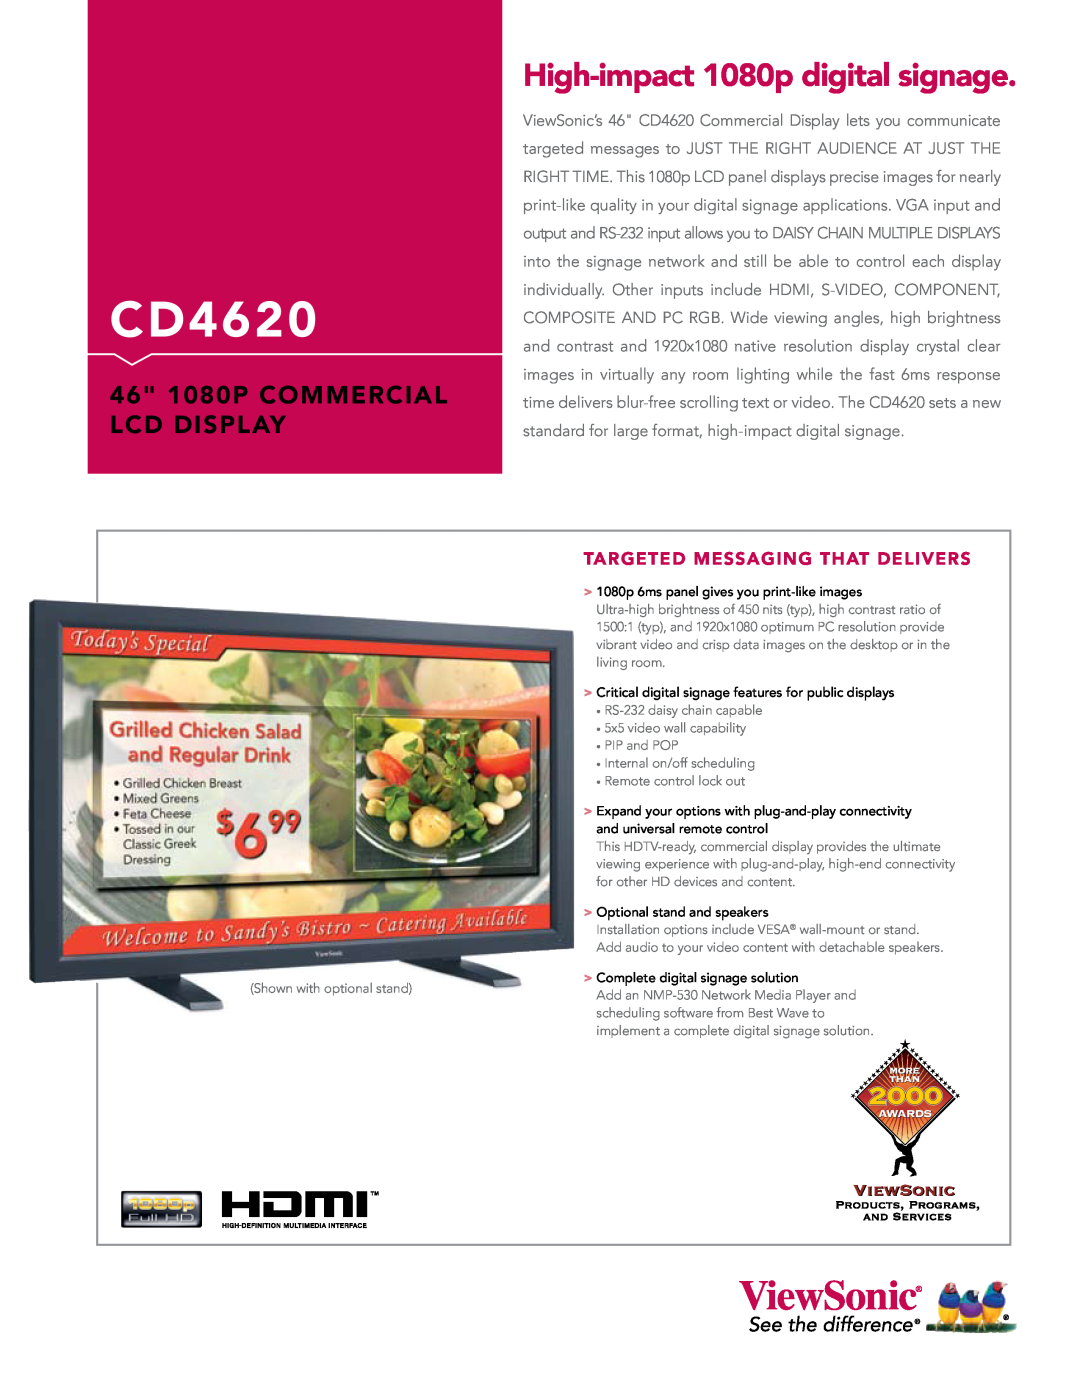 ViewSonic CD4620 manual High-impact 1080p digital signage, 46 1080P COMMERCIAL LCD DISPLAY 